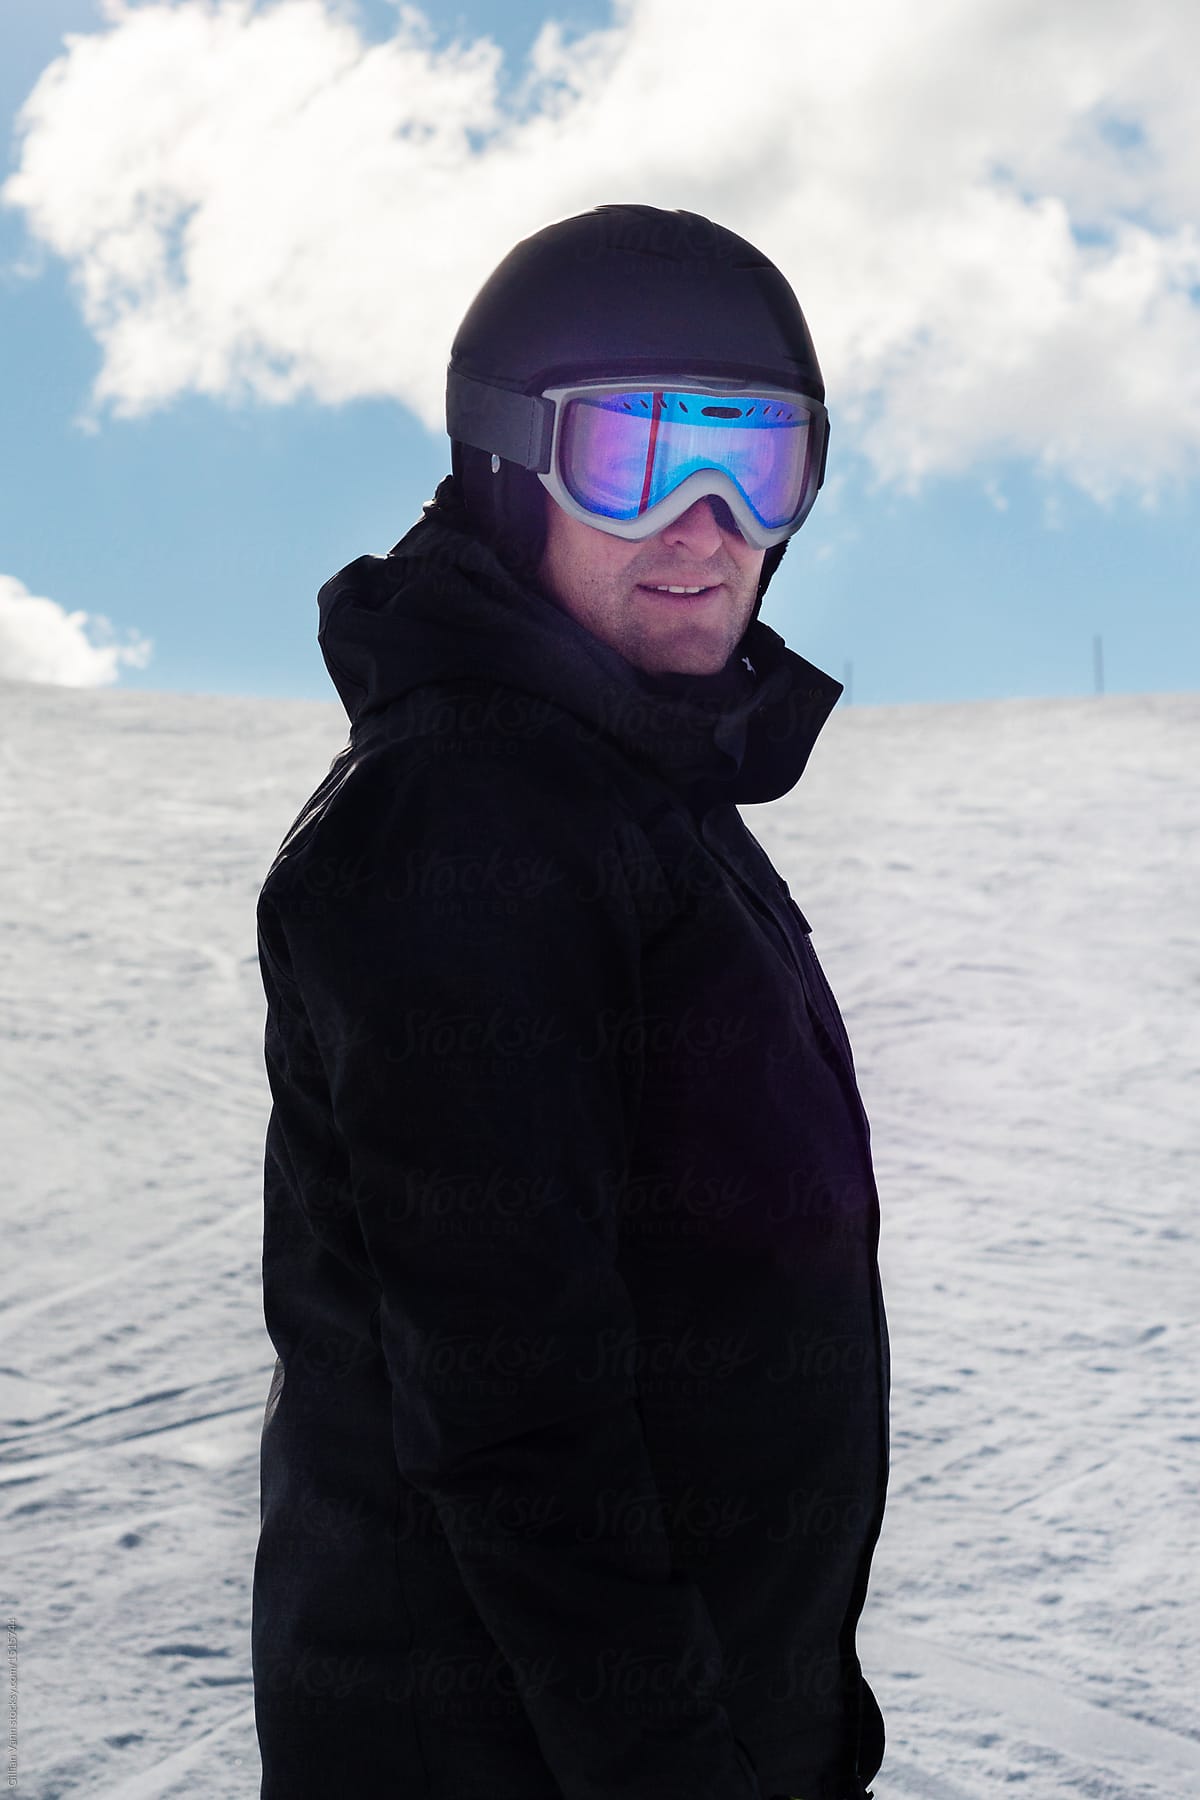 40 year old man in ski gear